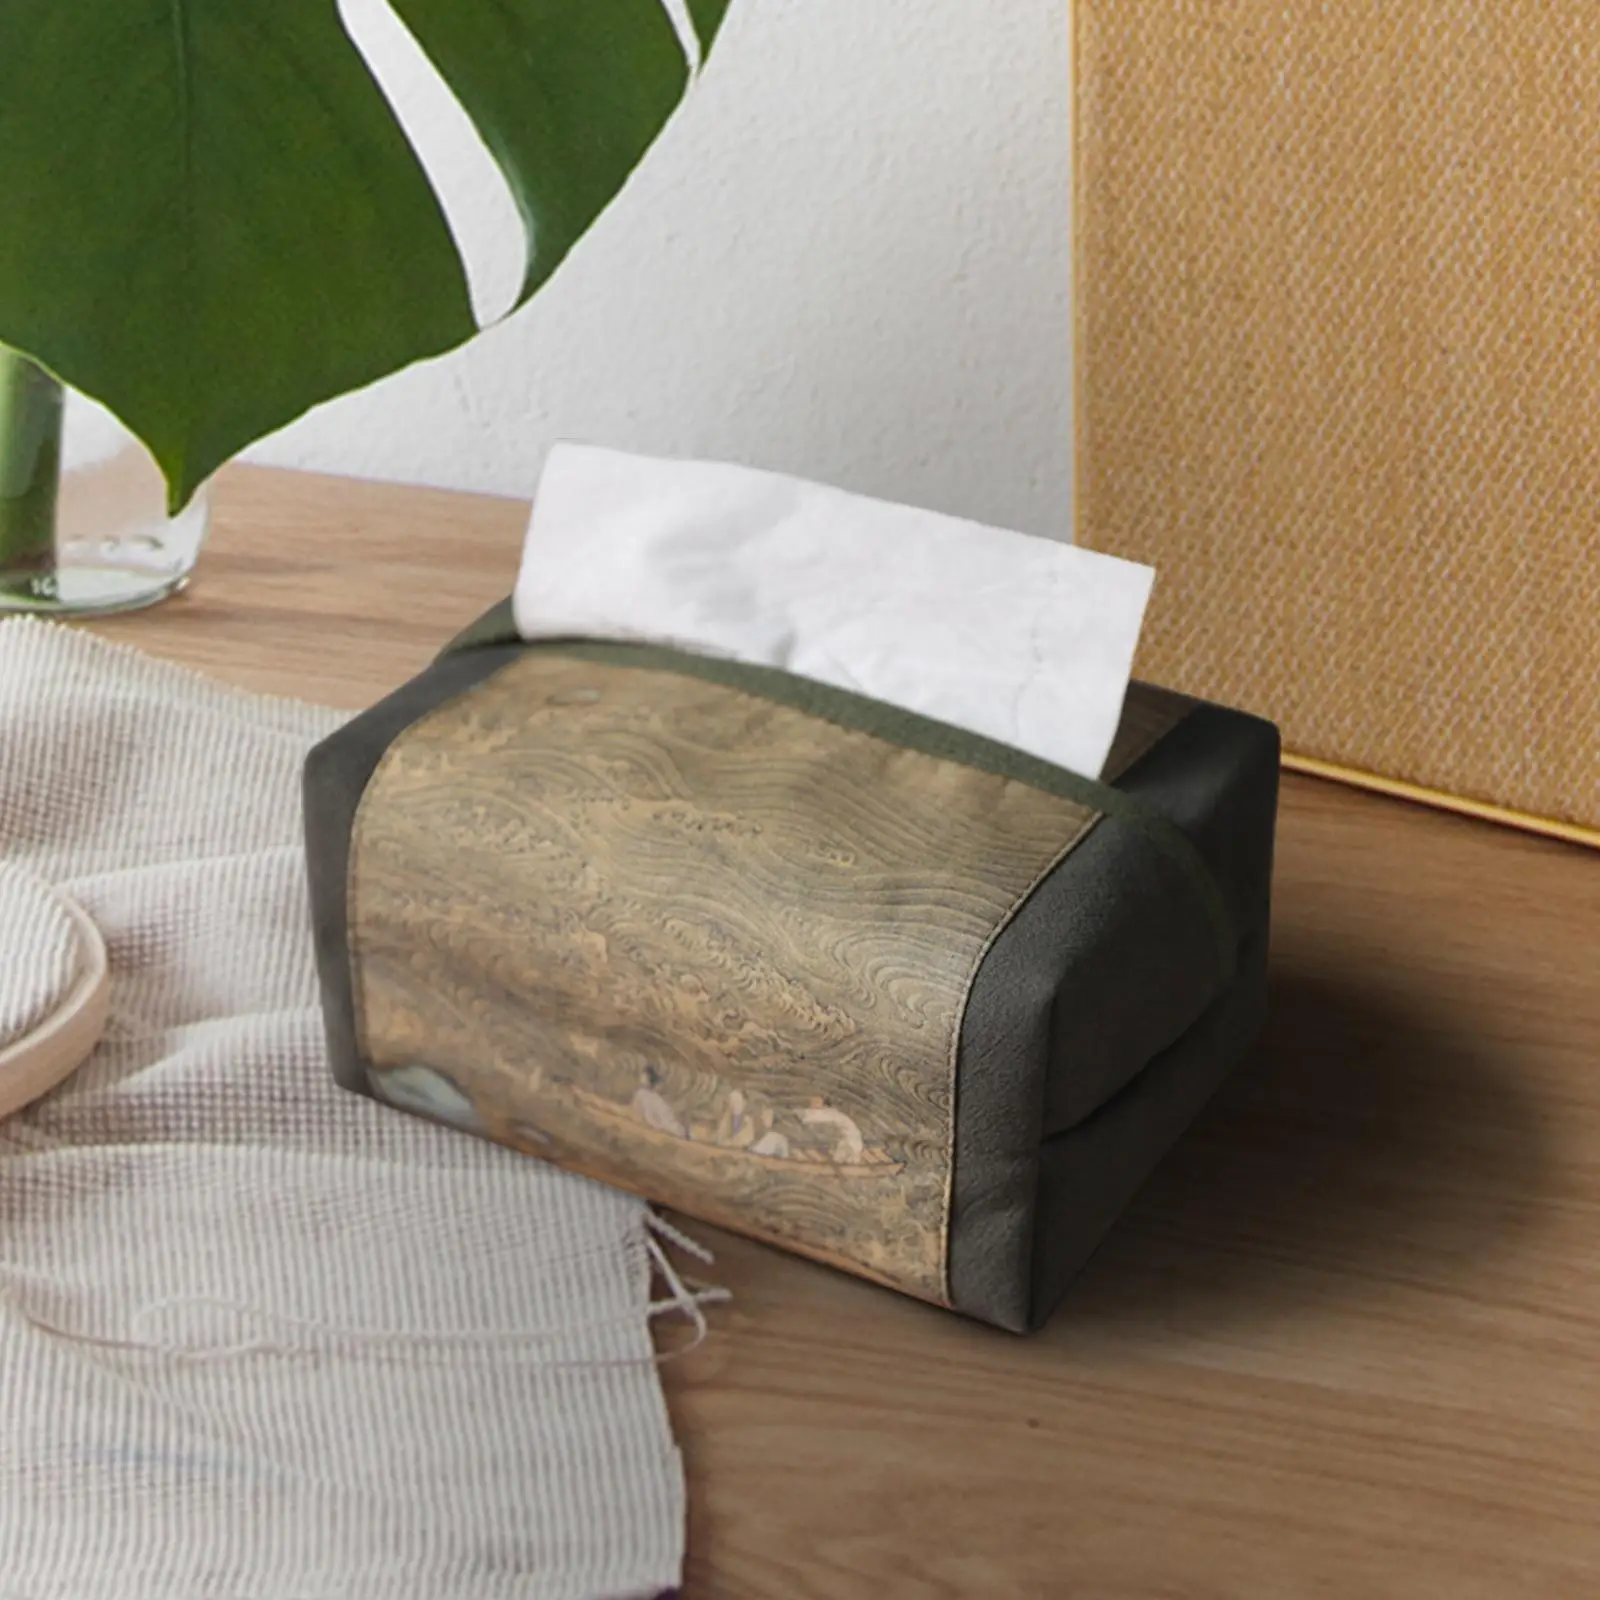 Tissue Dispenser Box Fall Resistance Portable Fashion Universal Tissue Box Holder for Bathroom Tabletop Bedroom Hotel Kitchen